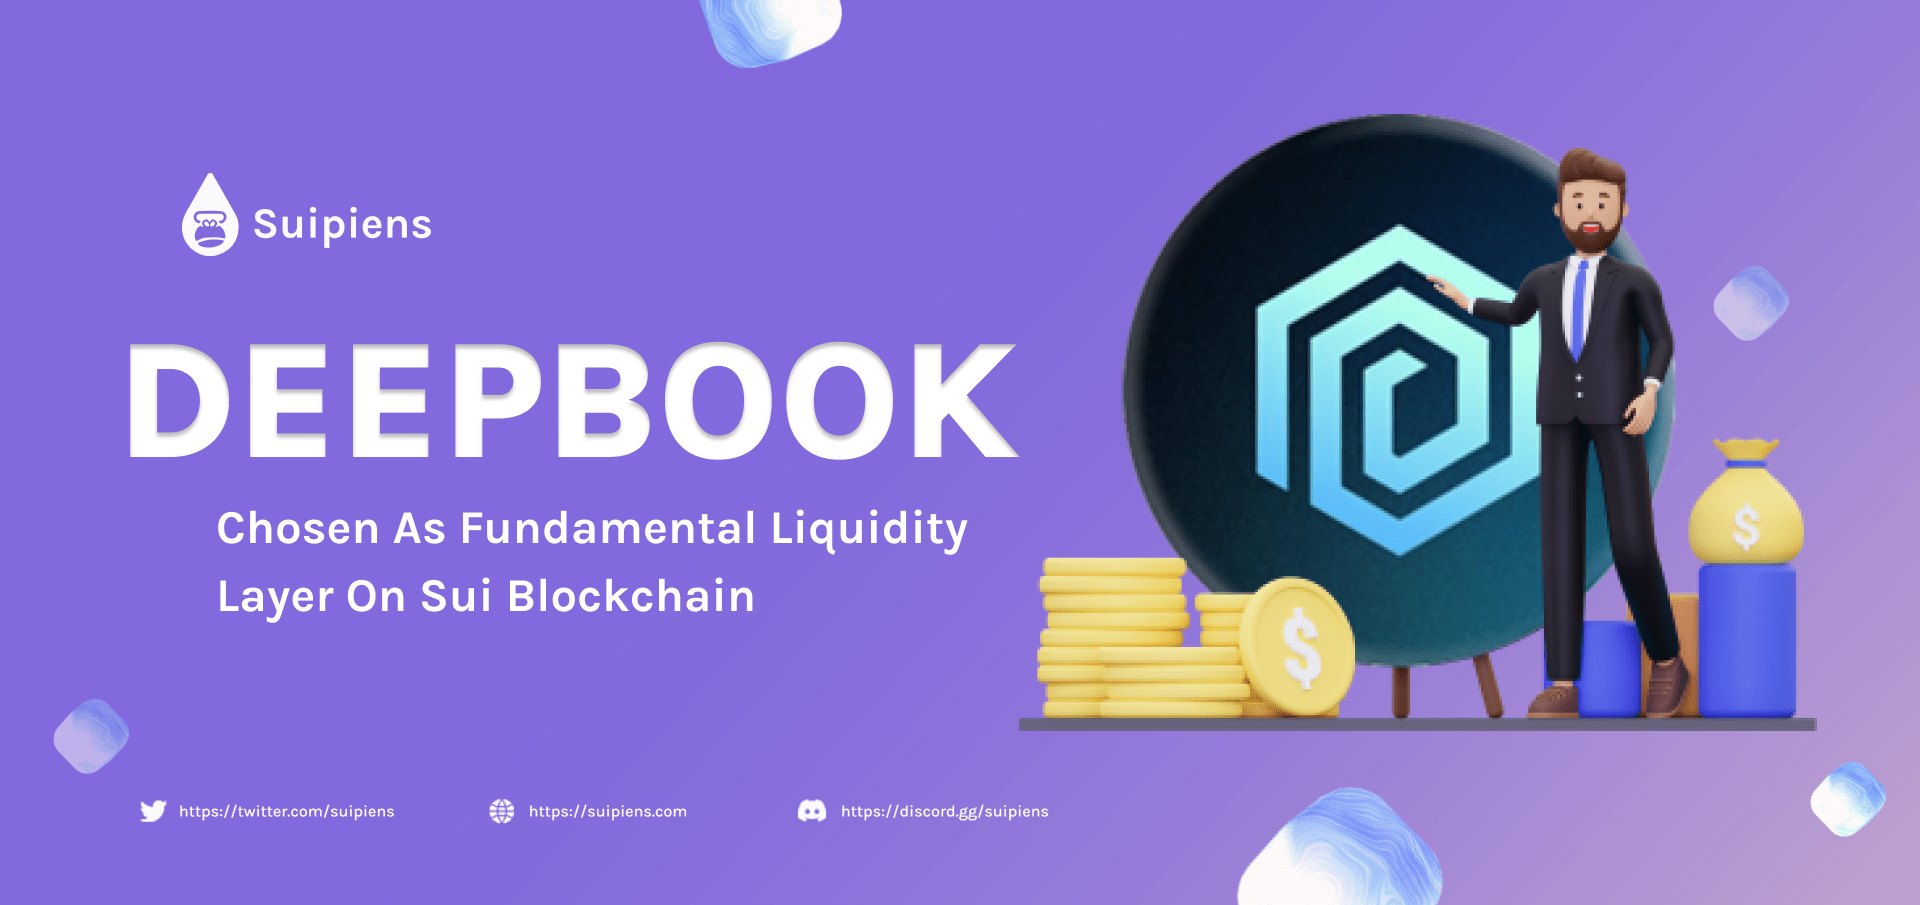 DeepBook Chosen As Fundamental Liquidity Layer On Sui Blockchain